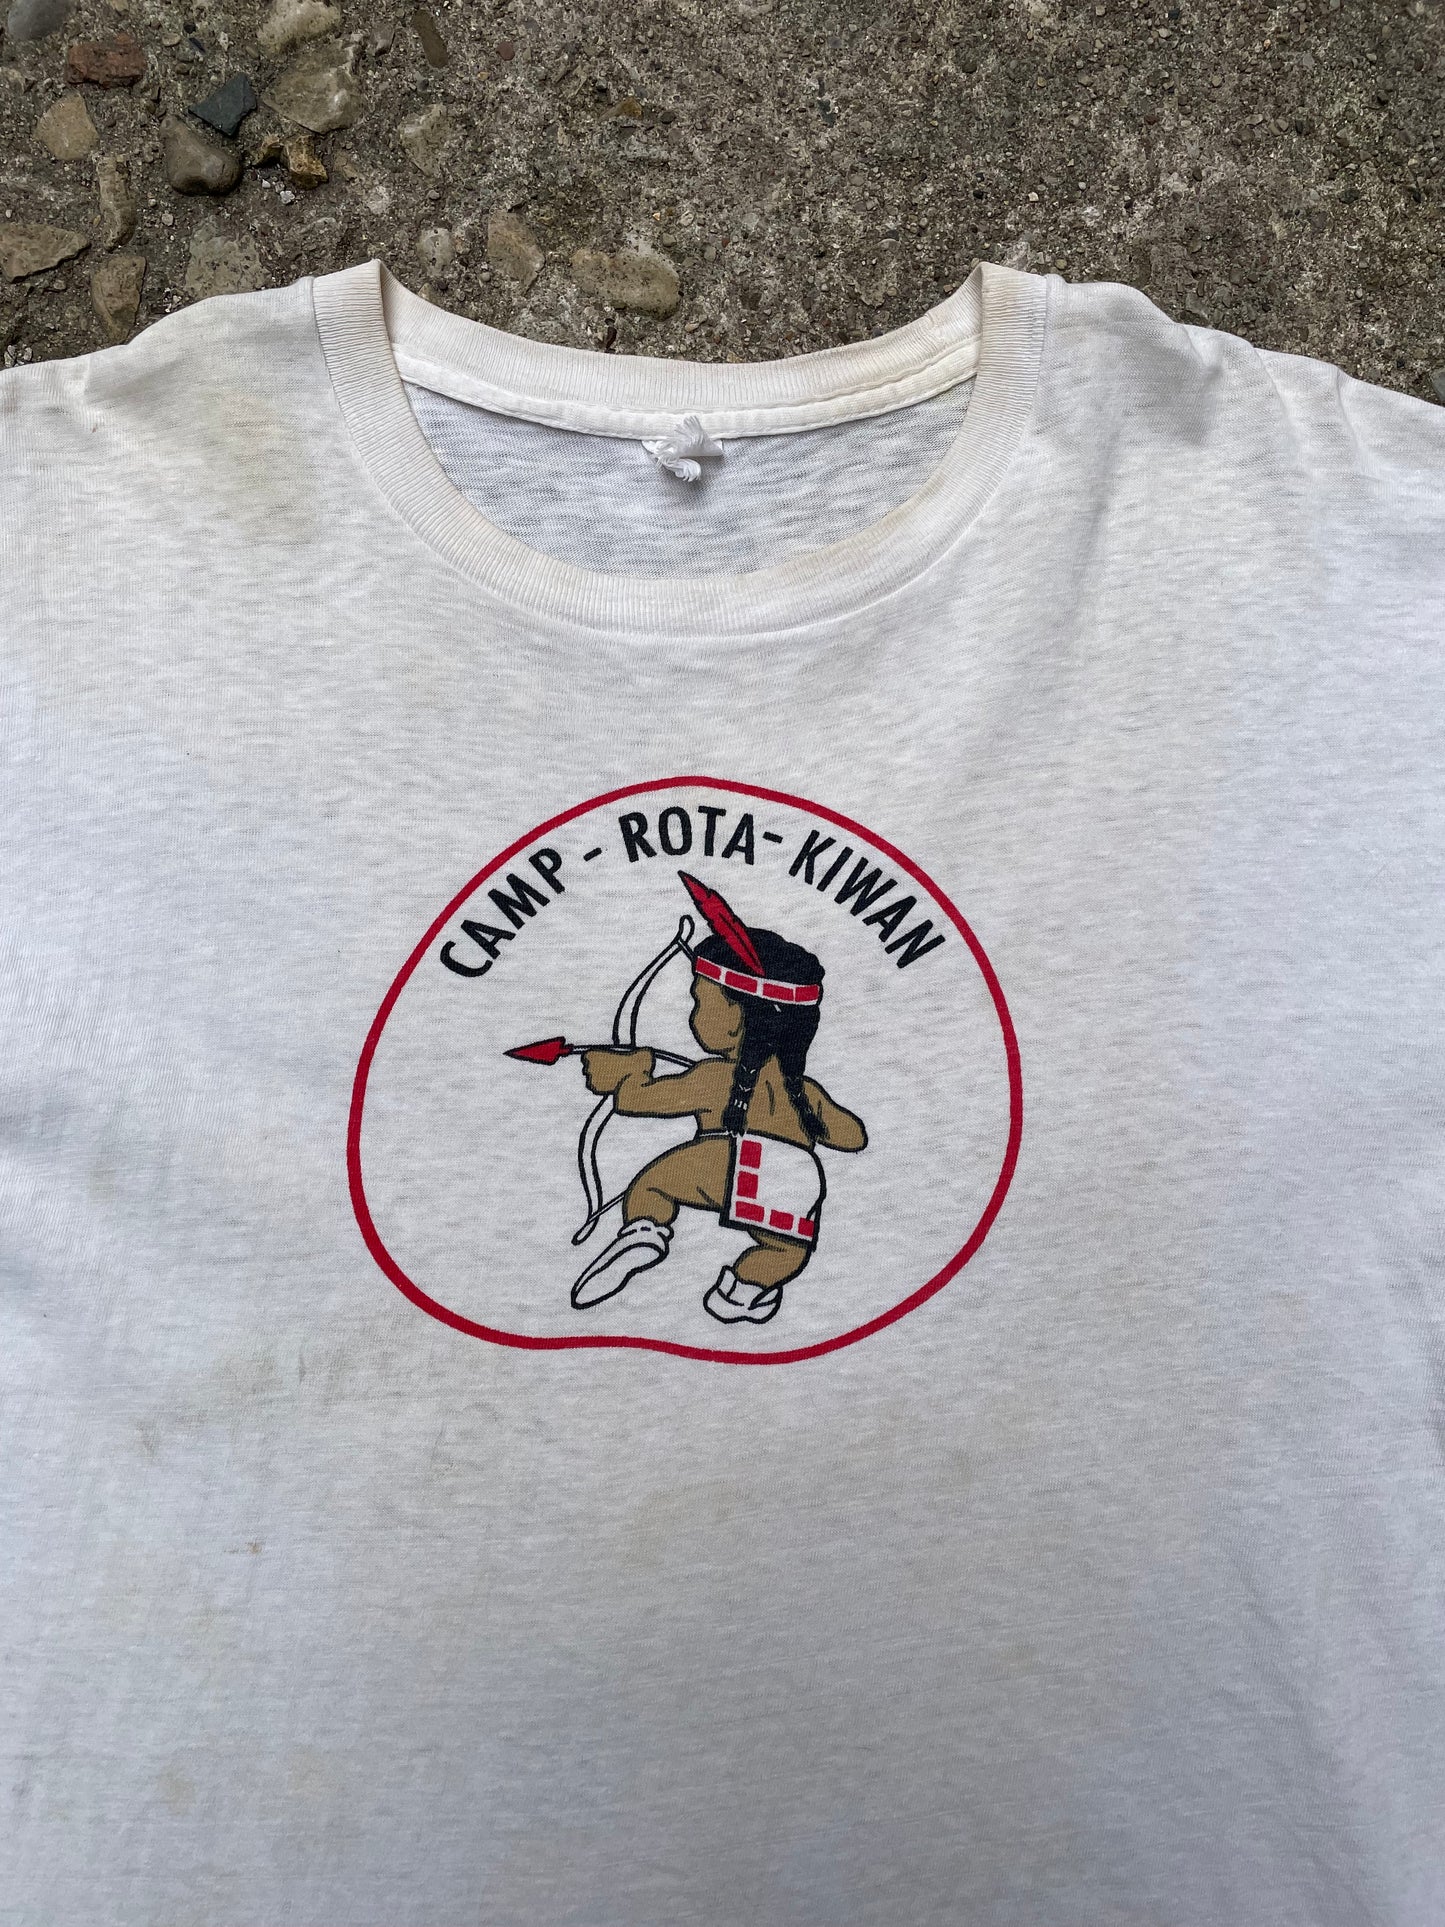 1950's Camp Rota-Kiwan BSA Camp T-Shirt - M